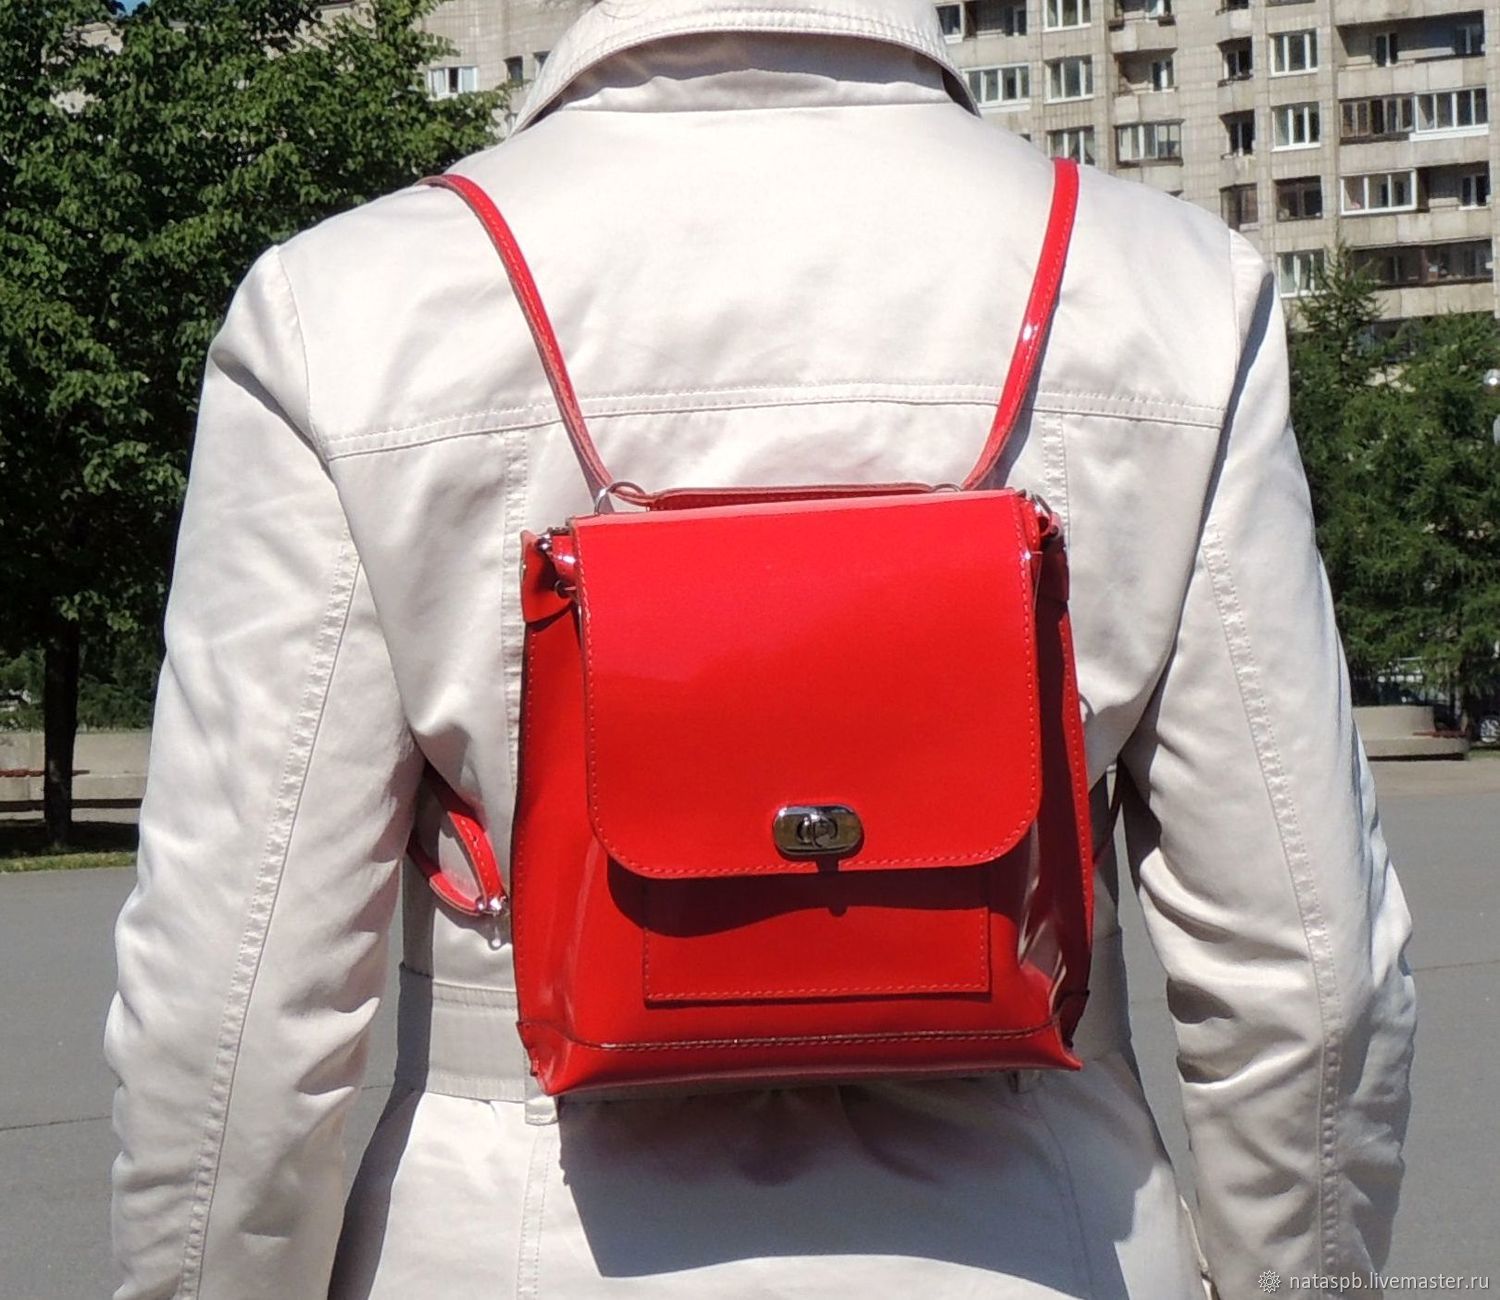  Bag backpack women's leather red Alice Mod.SR53-791, Backpacks, St. Petersburg,  Фото №1